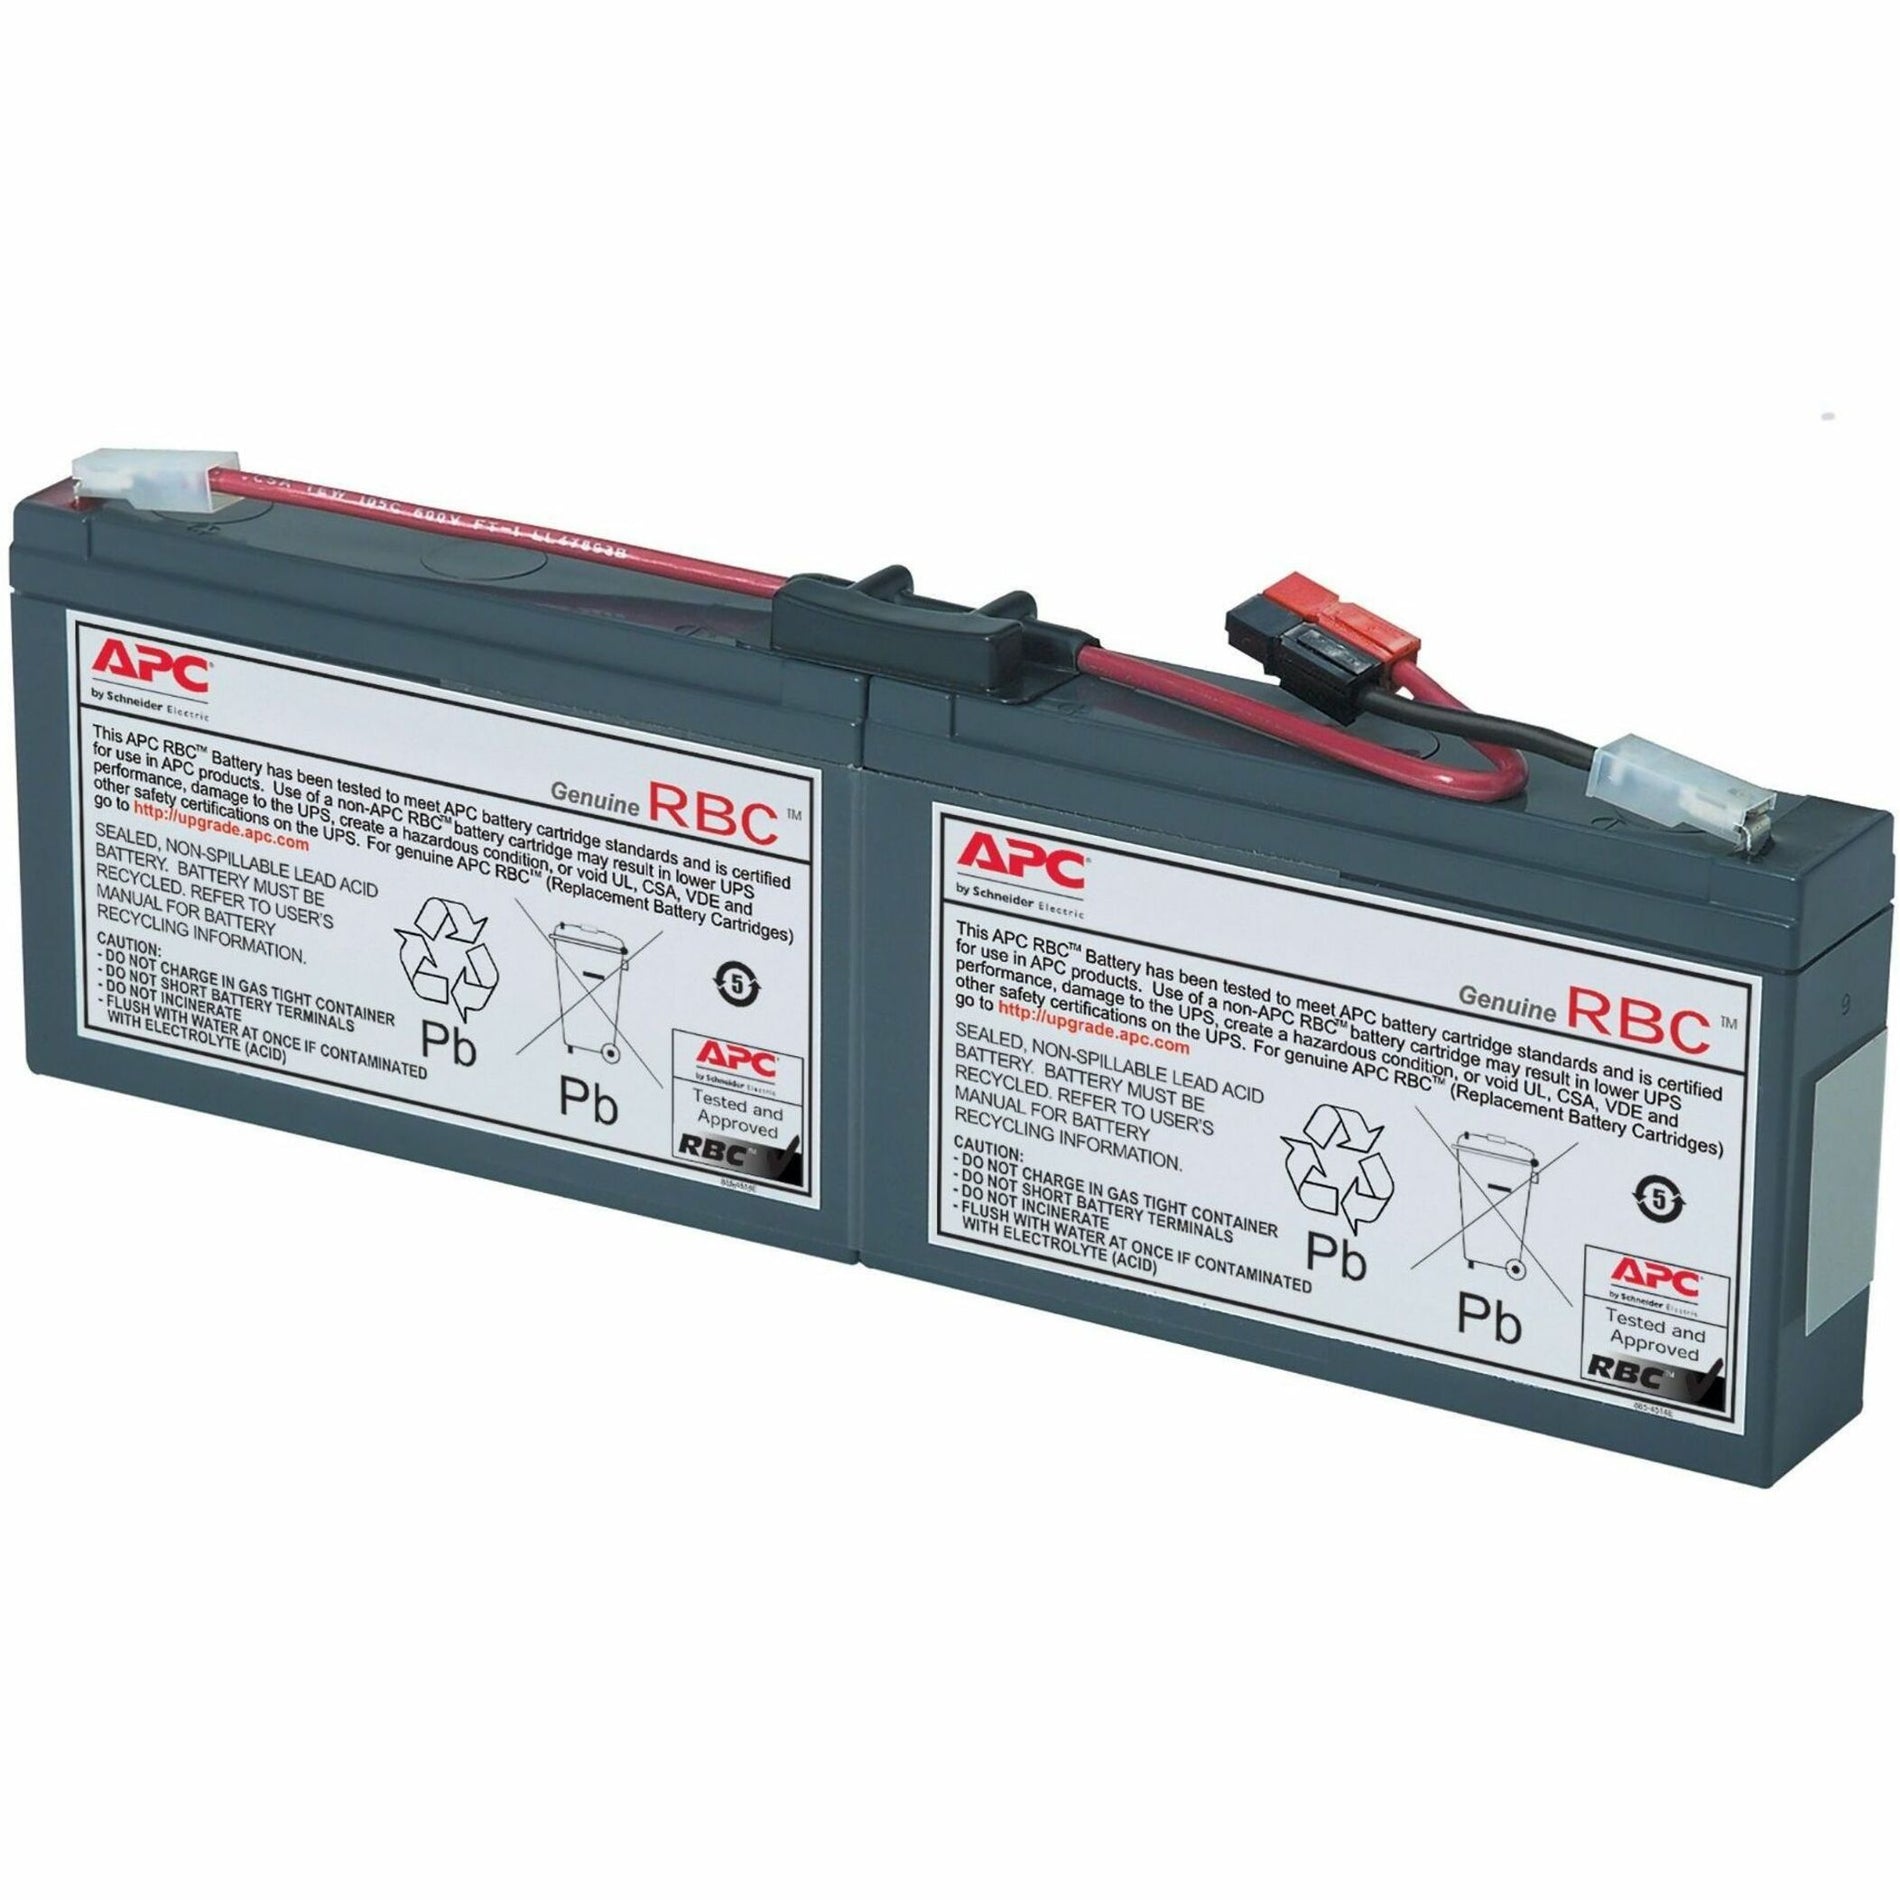 APC RBC18 Replacement Battery Cartridge #18, 2 Year Warranty, 9Ah Capacity